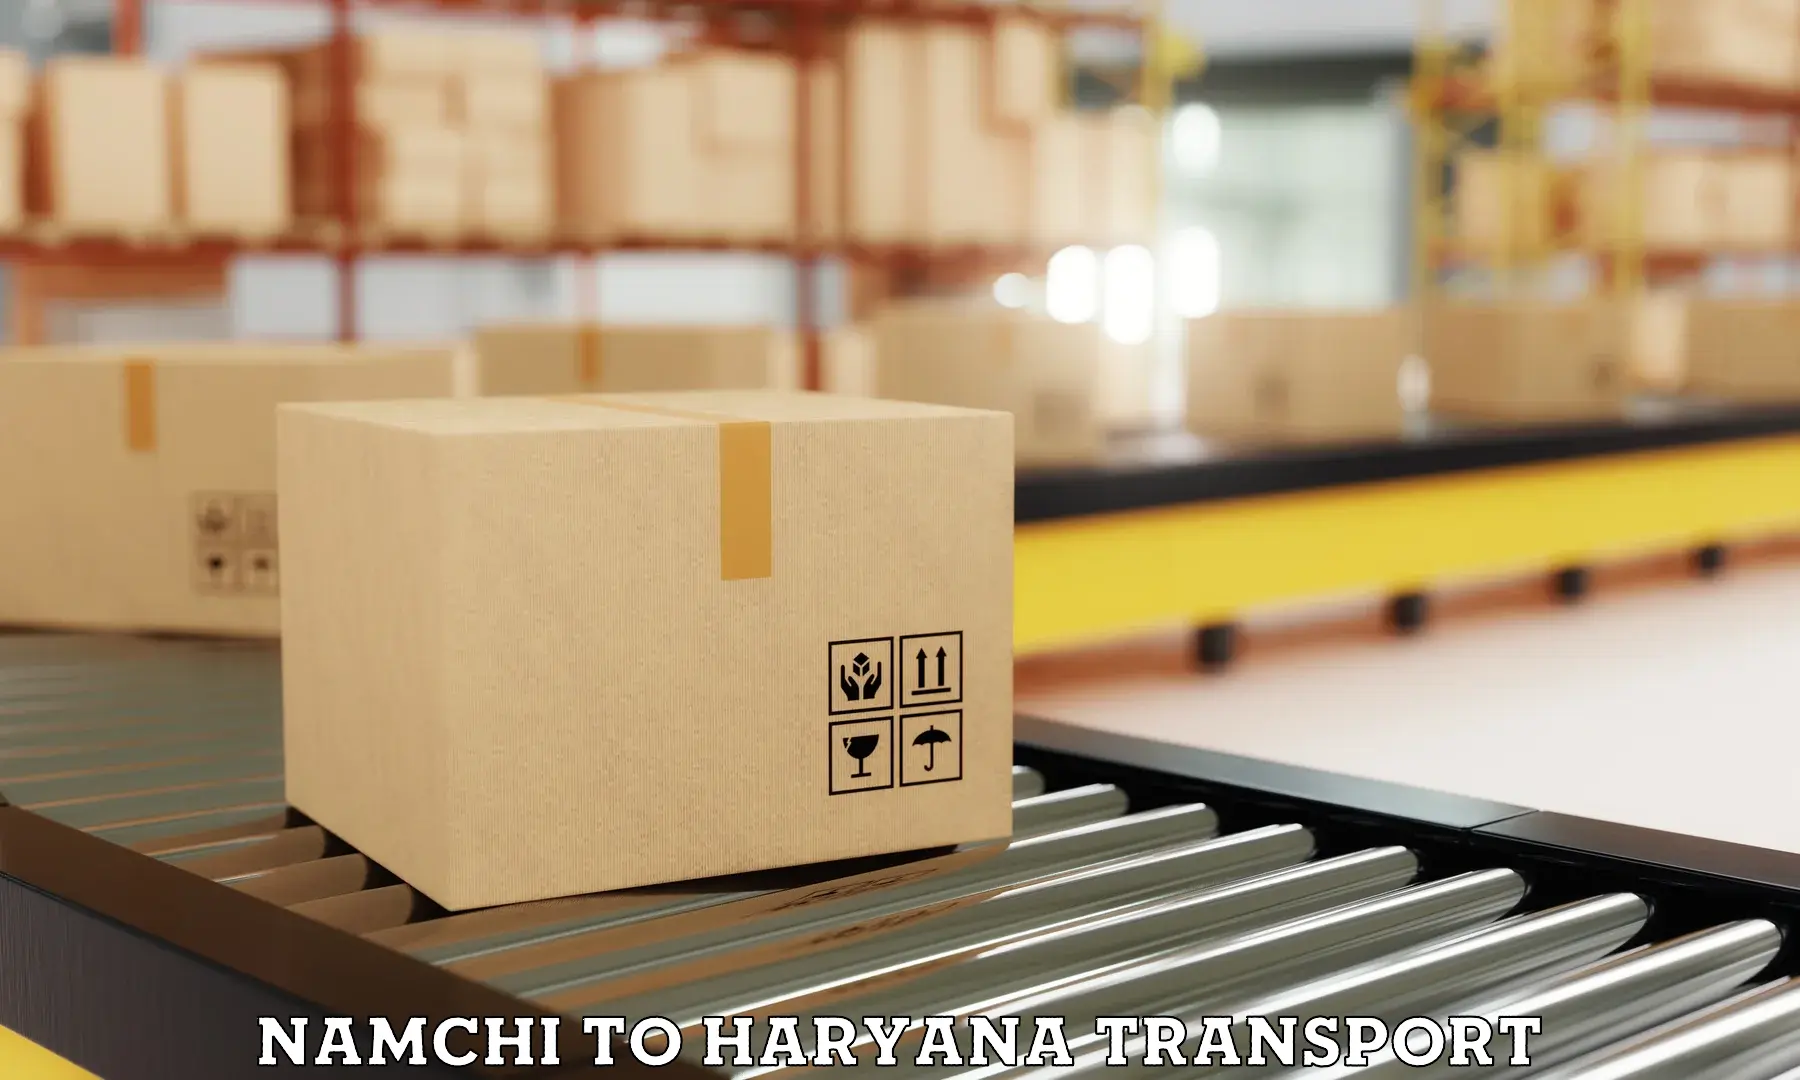 Delivery service Namchi to Chirya